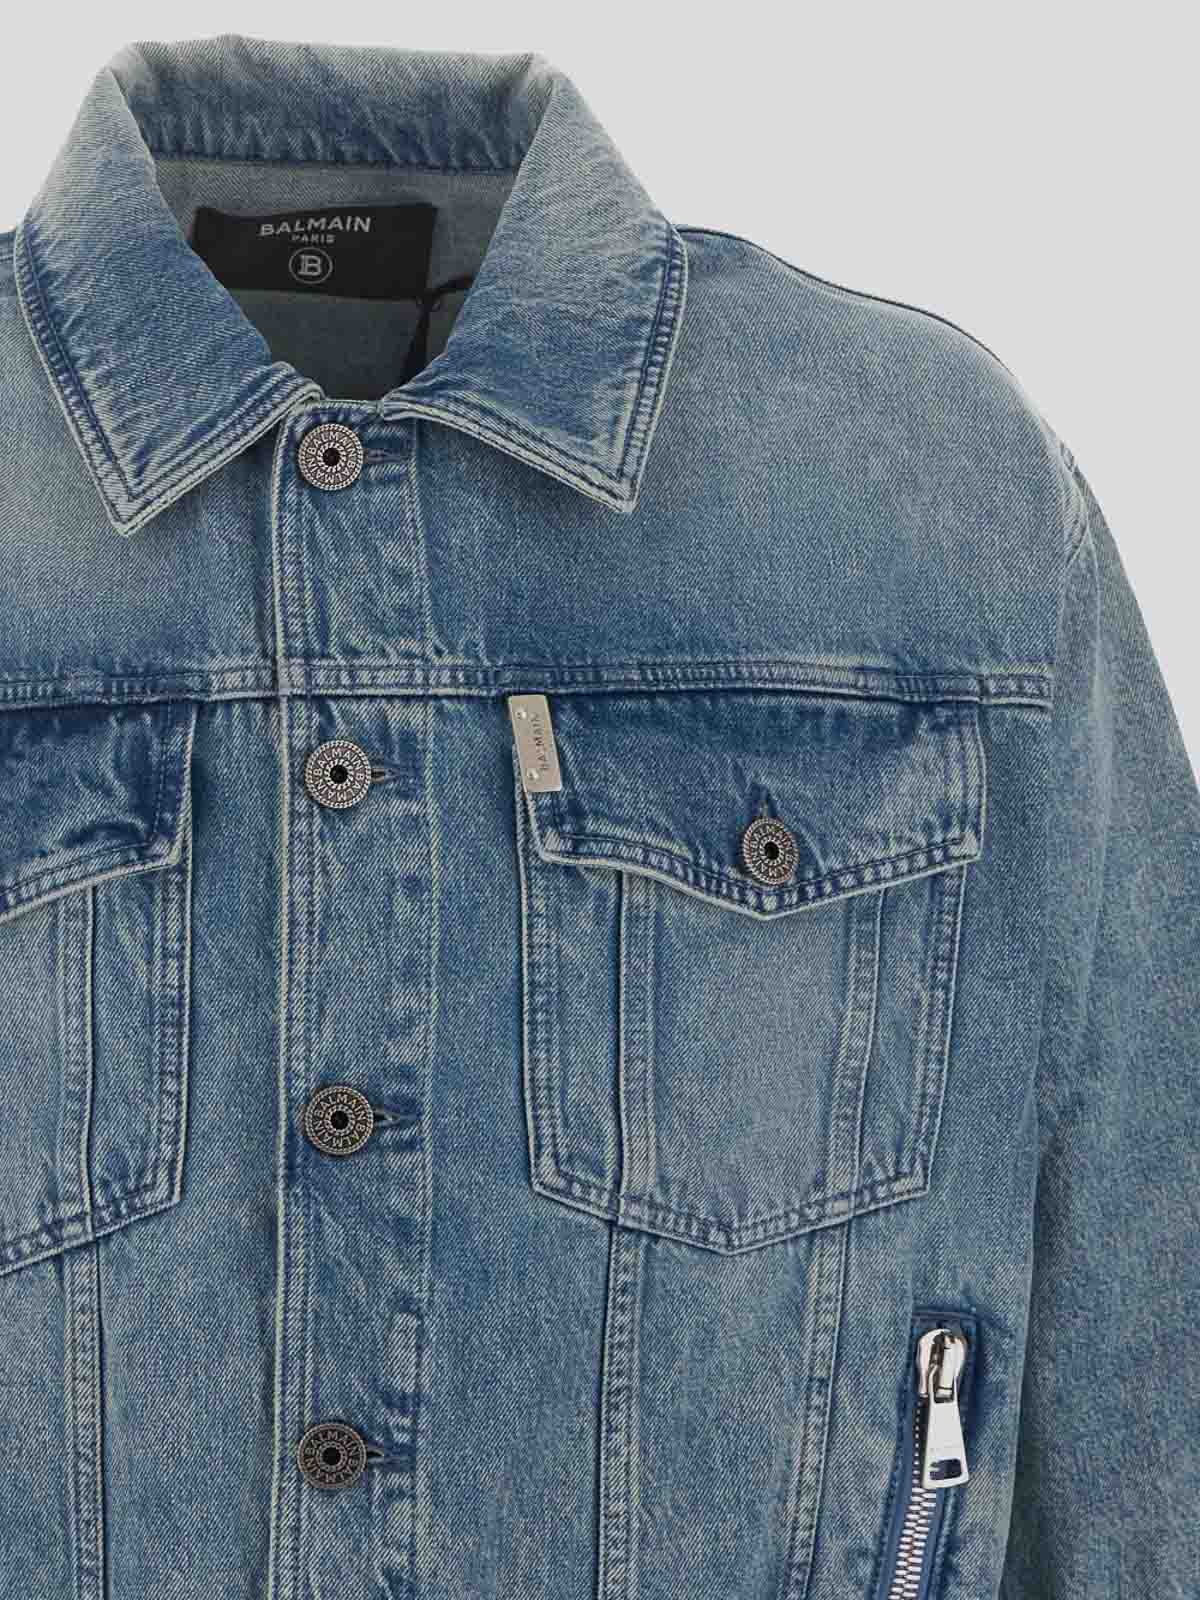 BALMAIN Embellished vintage denim jacket - Enny Monaco